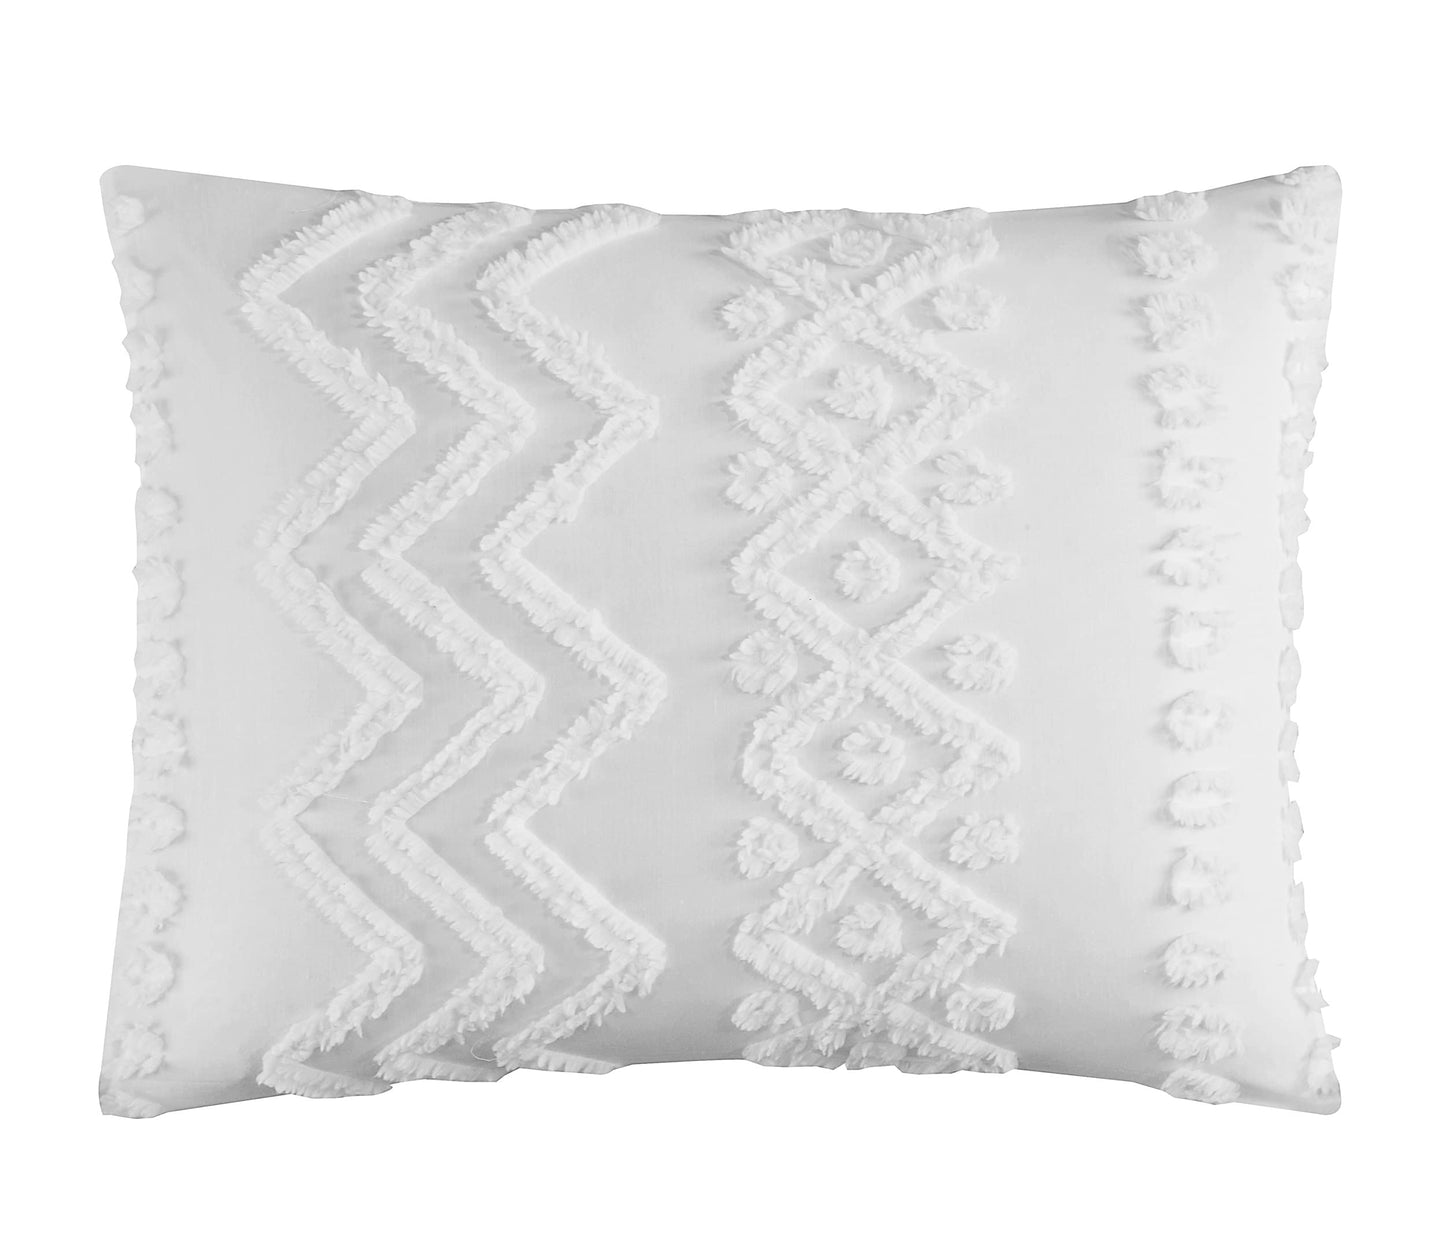 Chic Home Addison 5 Piece Comforter Set Jacquard Chevron Geometric Pattern Design Bedding - Decorative Pillows Shams Included, King, White